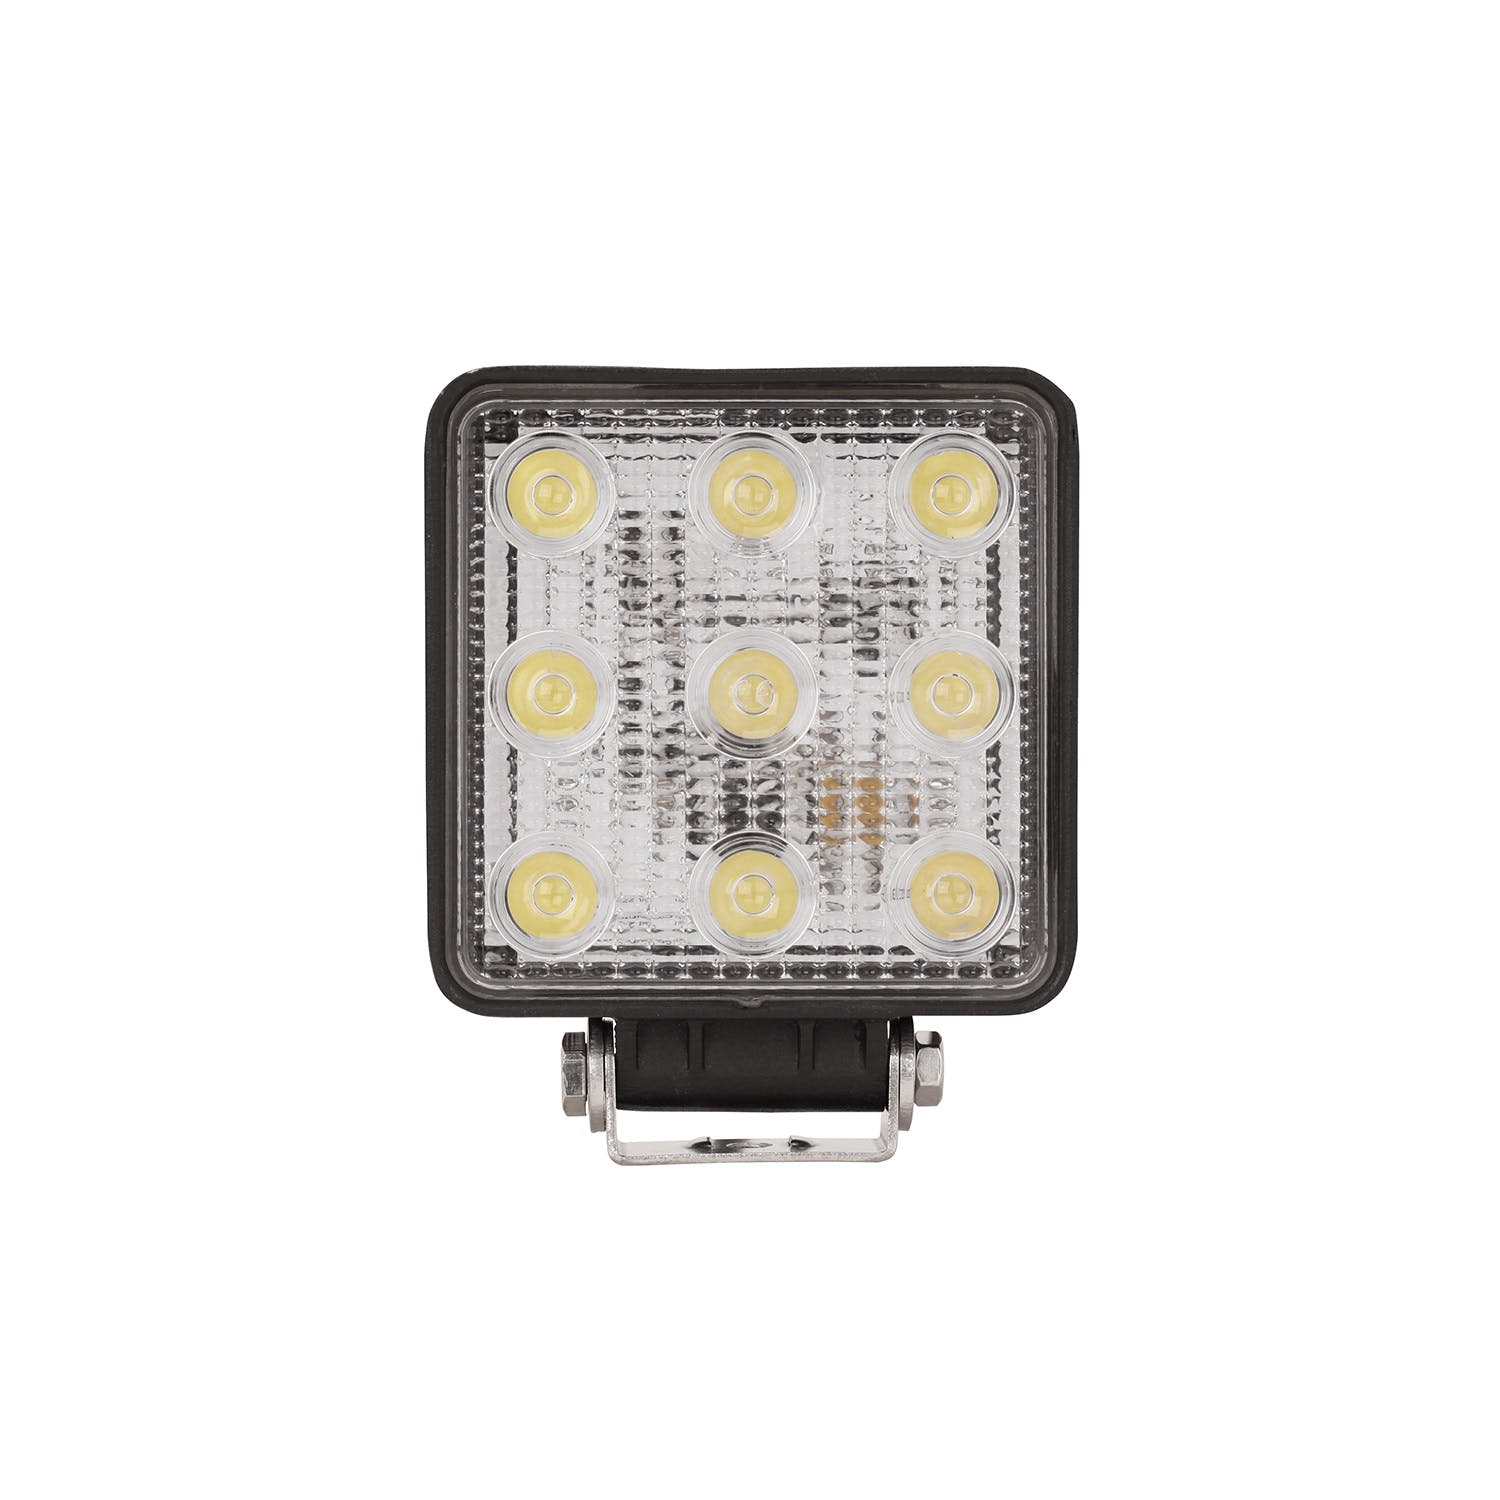 Westin Automotive 09-12211A LED Work Utility Light Square 4.6 inch x 5.3 inch Spot with 3W Epistar